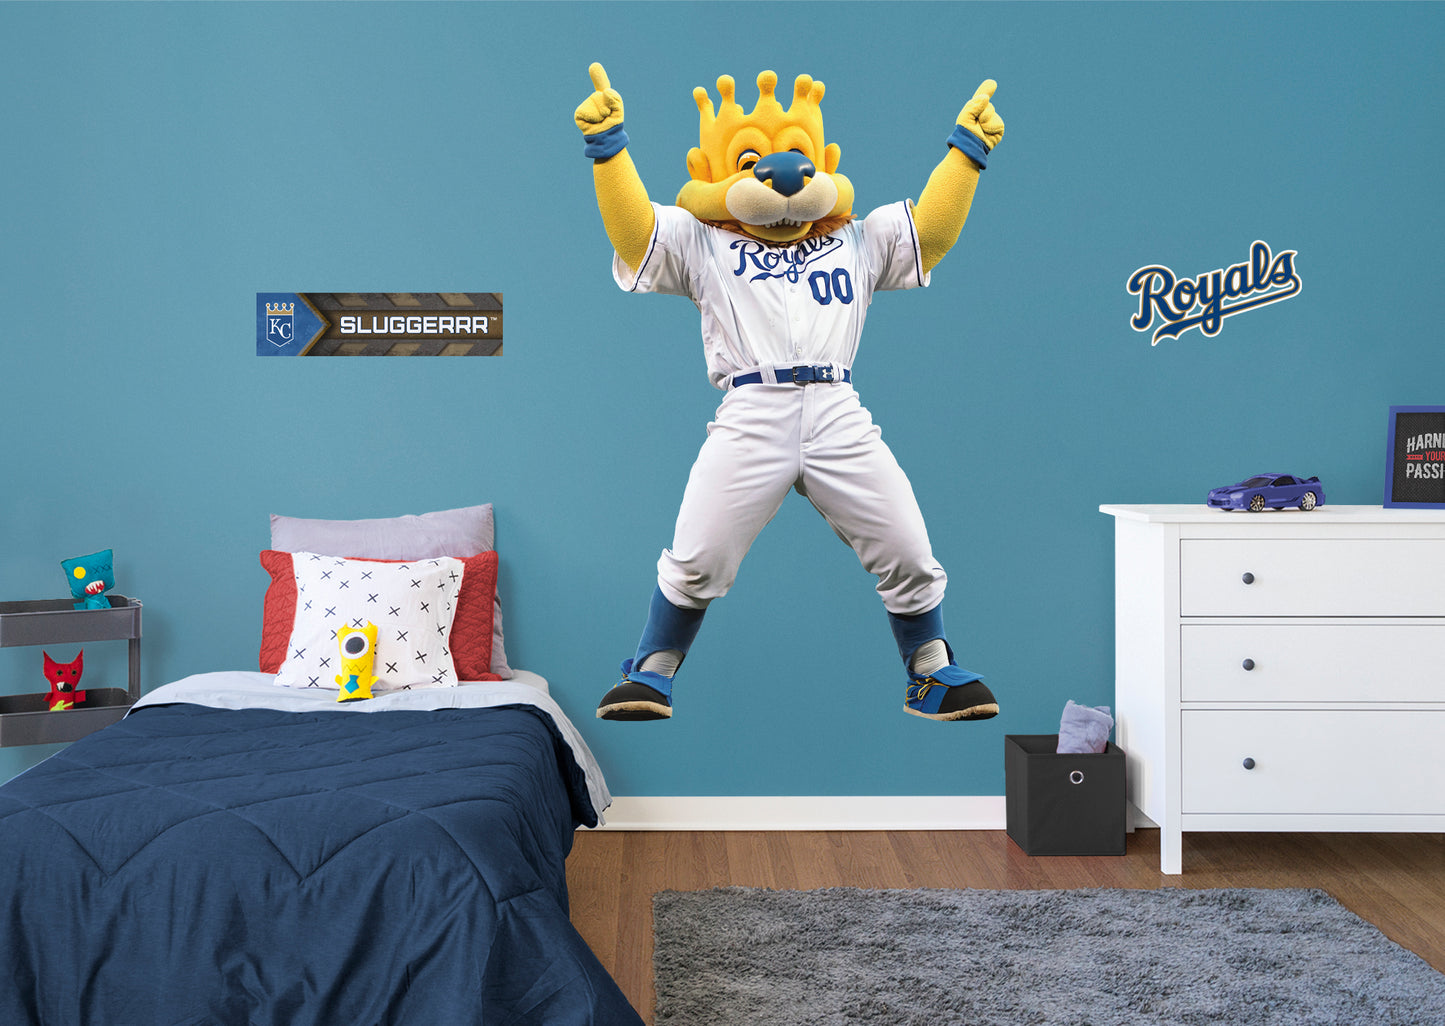 Kansas City Royals: Sluggerrr  Mascot        - Officially Licensed MLB Removable Wall   Adhesive Decal